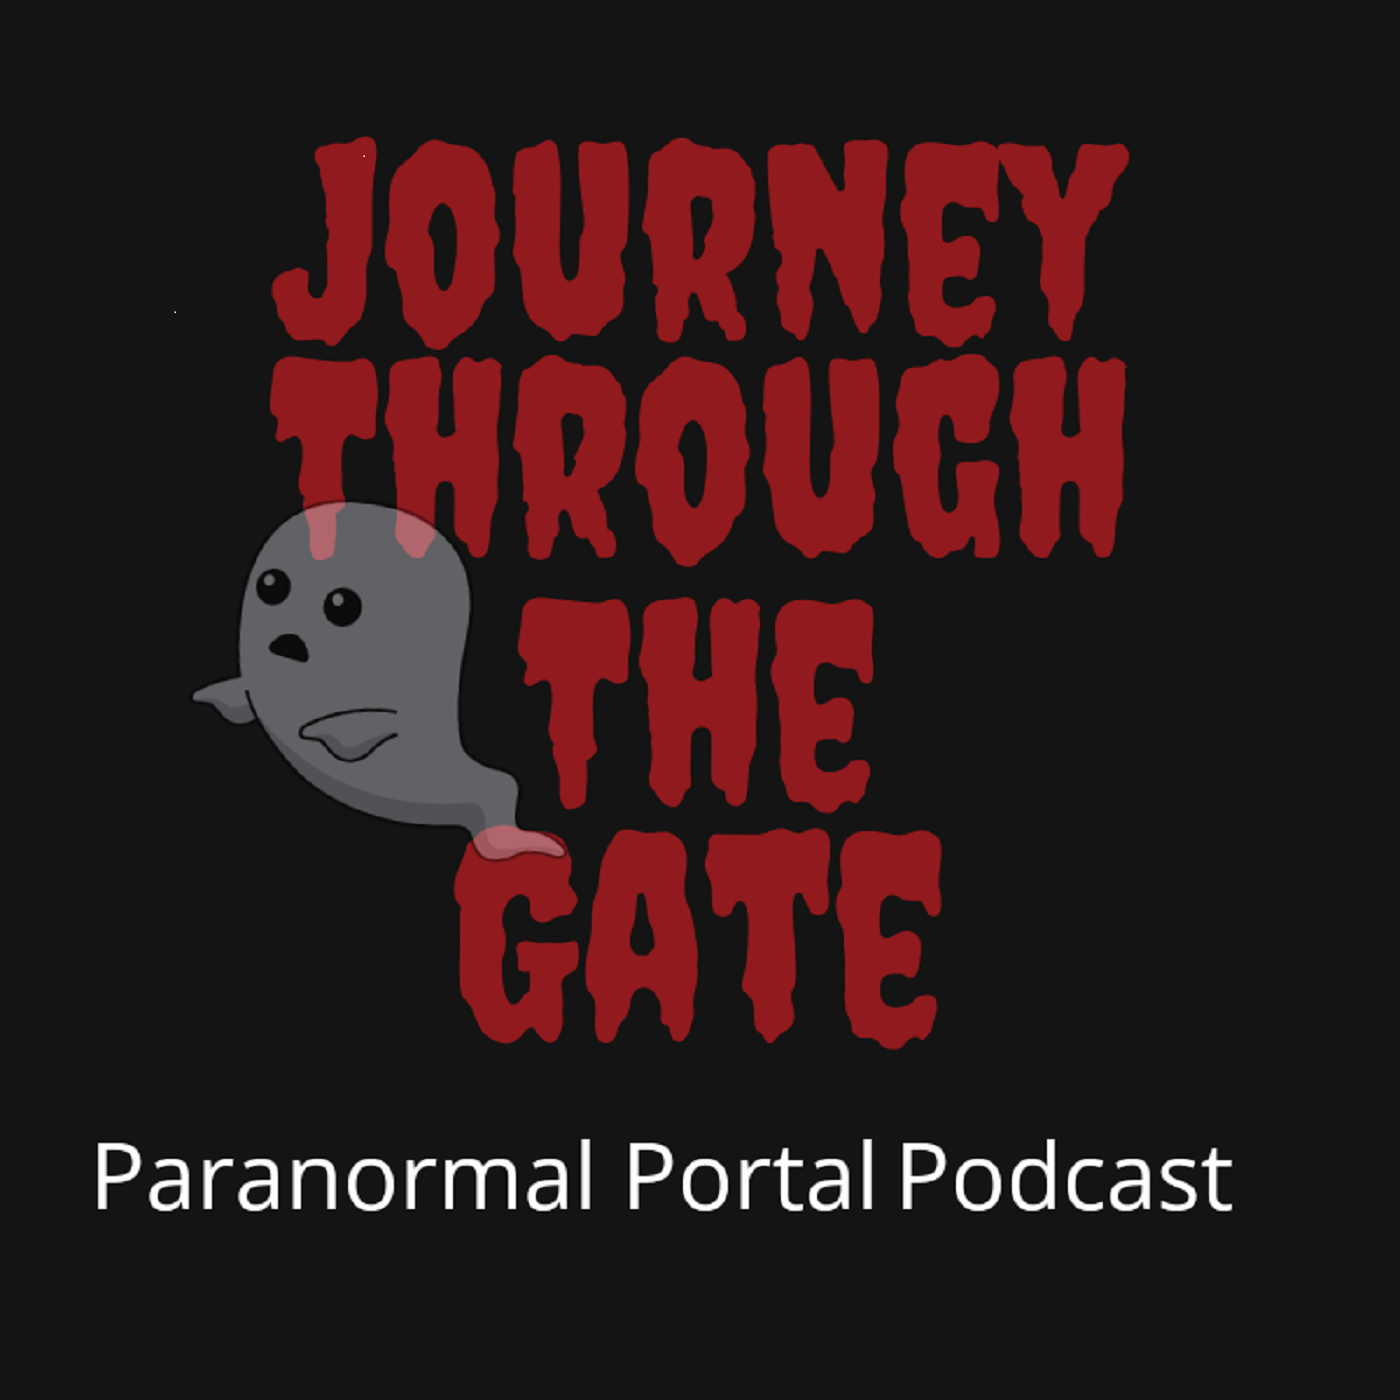 Shadow Person Logo - Journeythroughthegate's podcast. Listen via Stitcher Radio On Demand